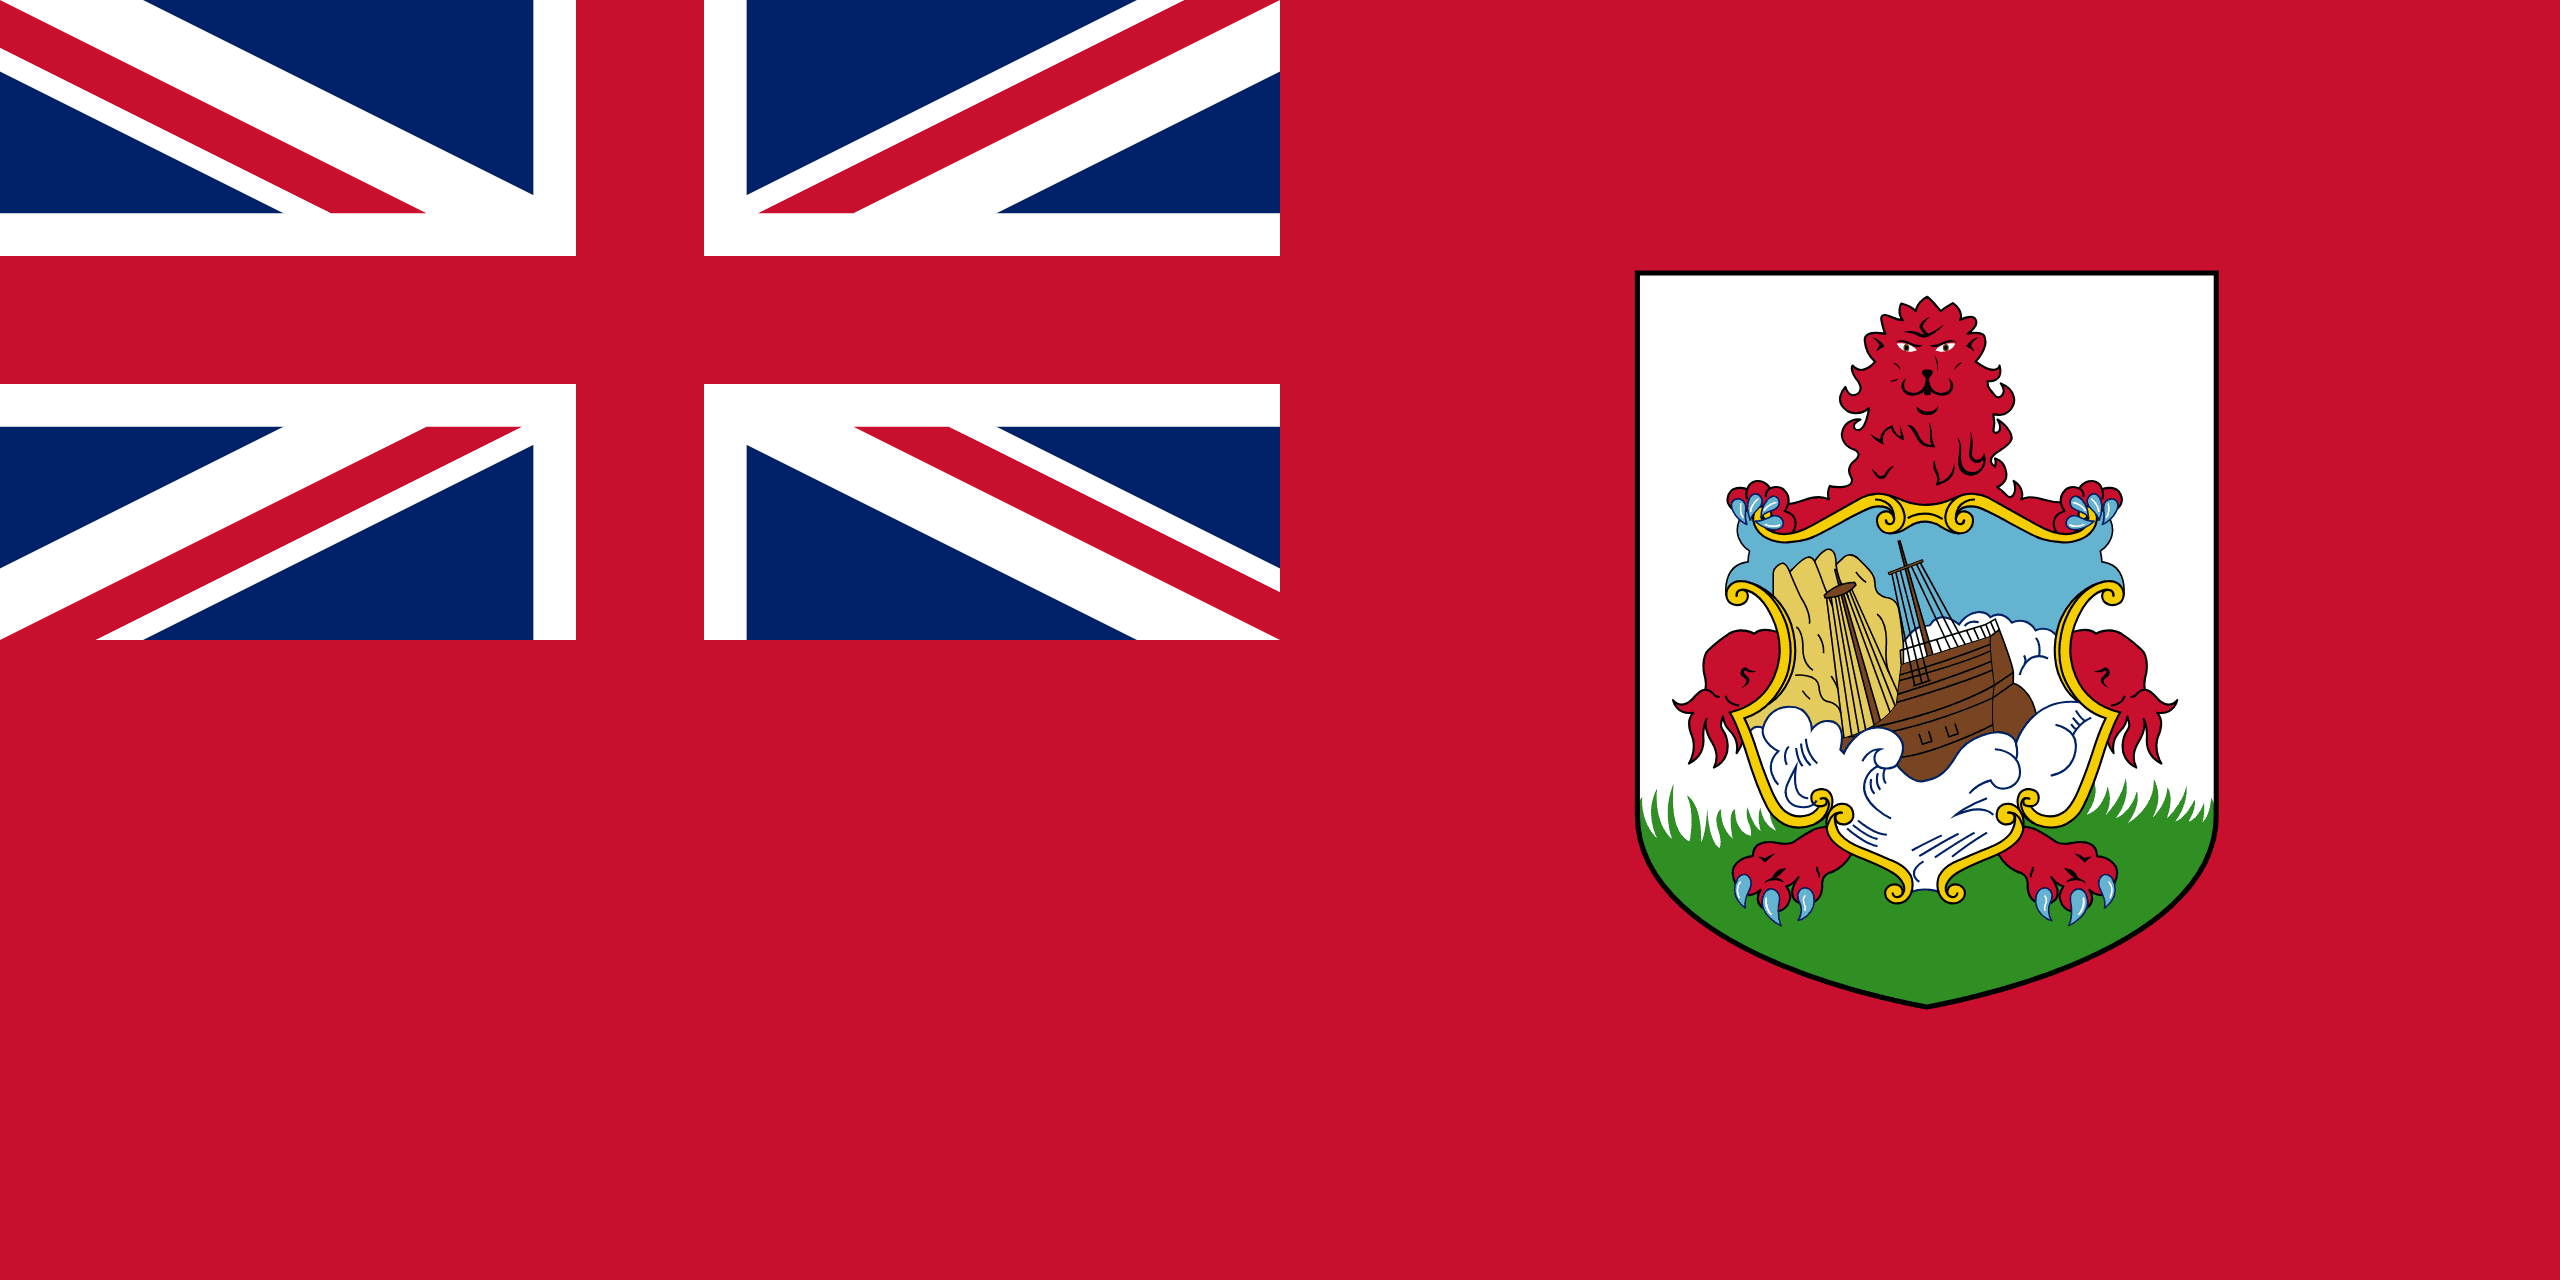 Bandeira das Bermudas - imagens para descarregar | Bandeirasnacionais.com